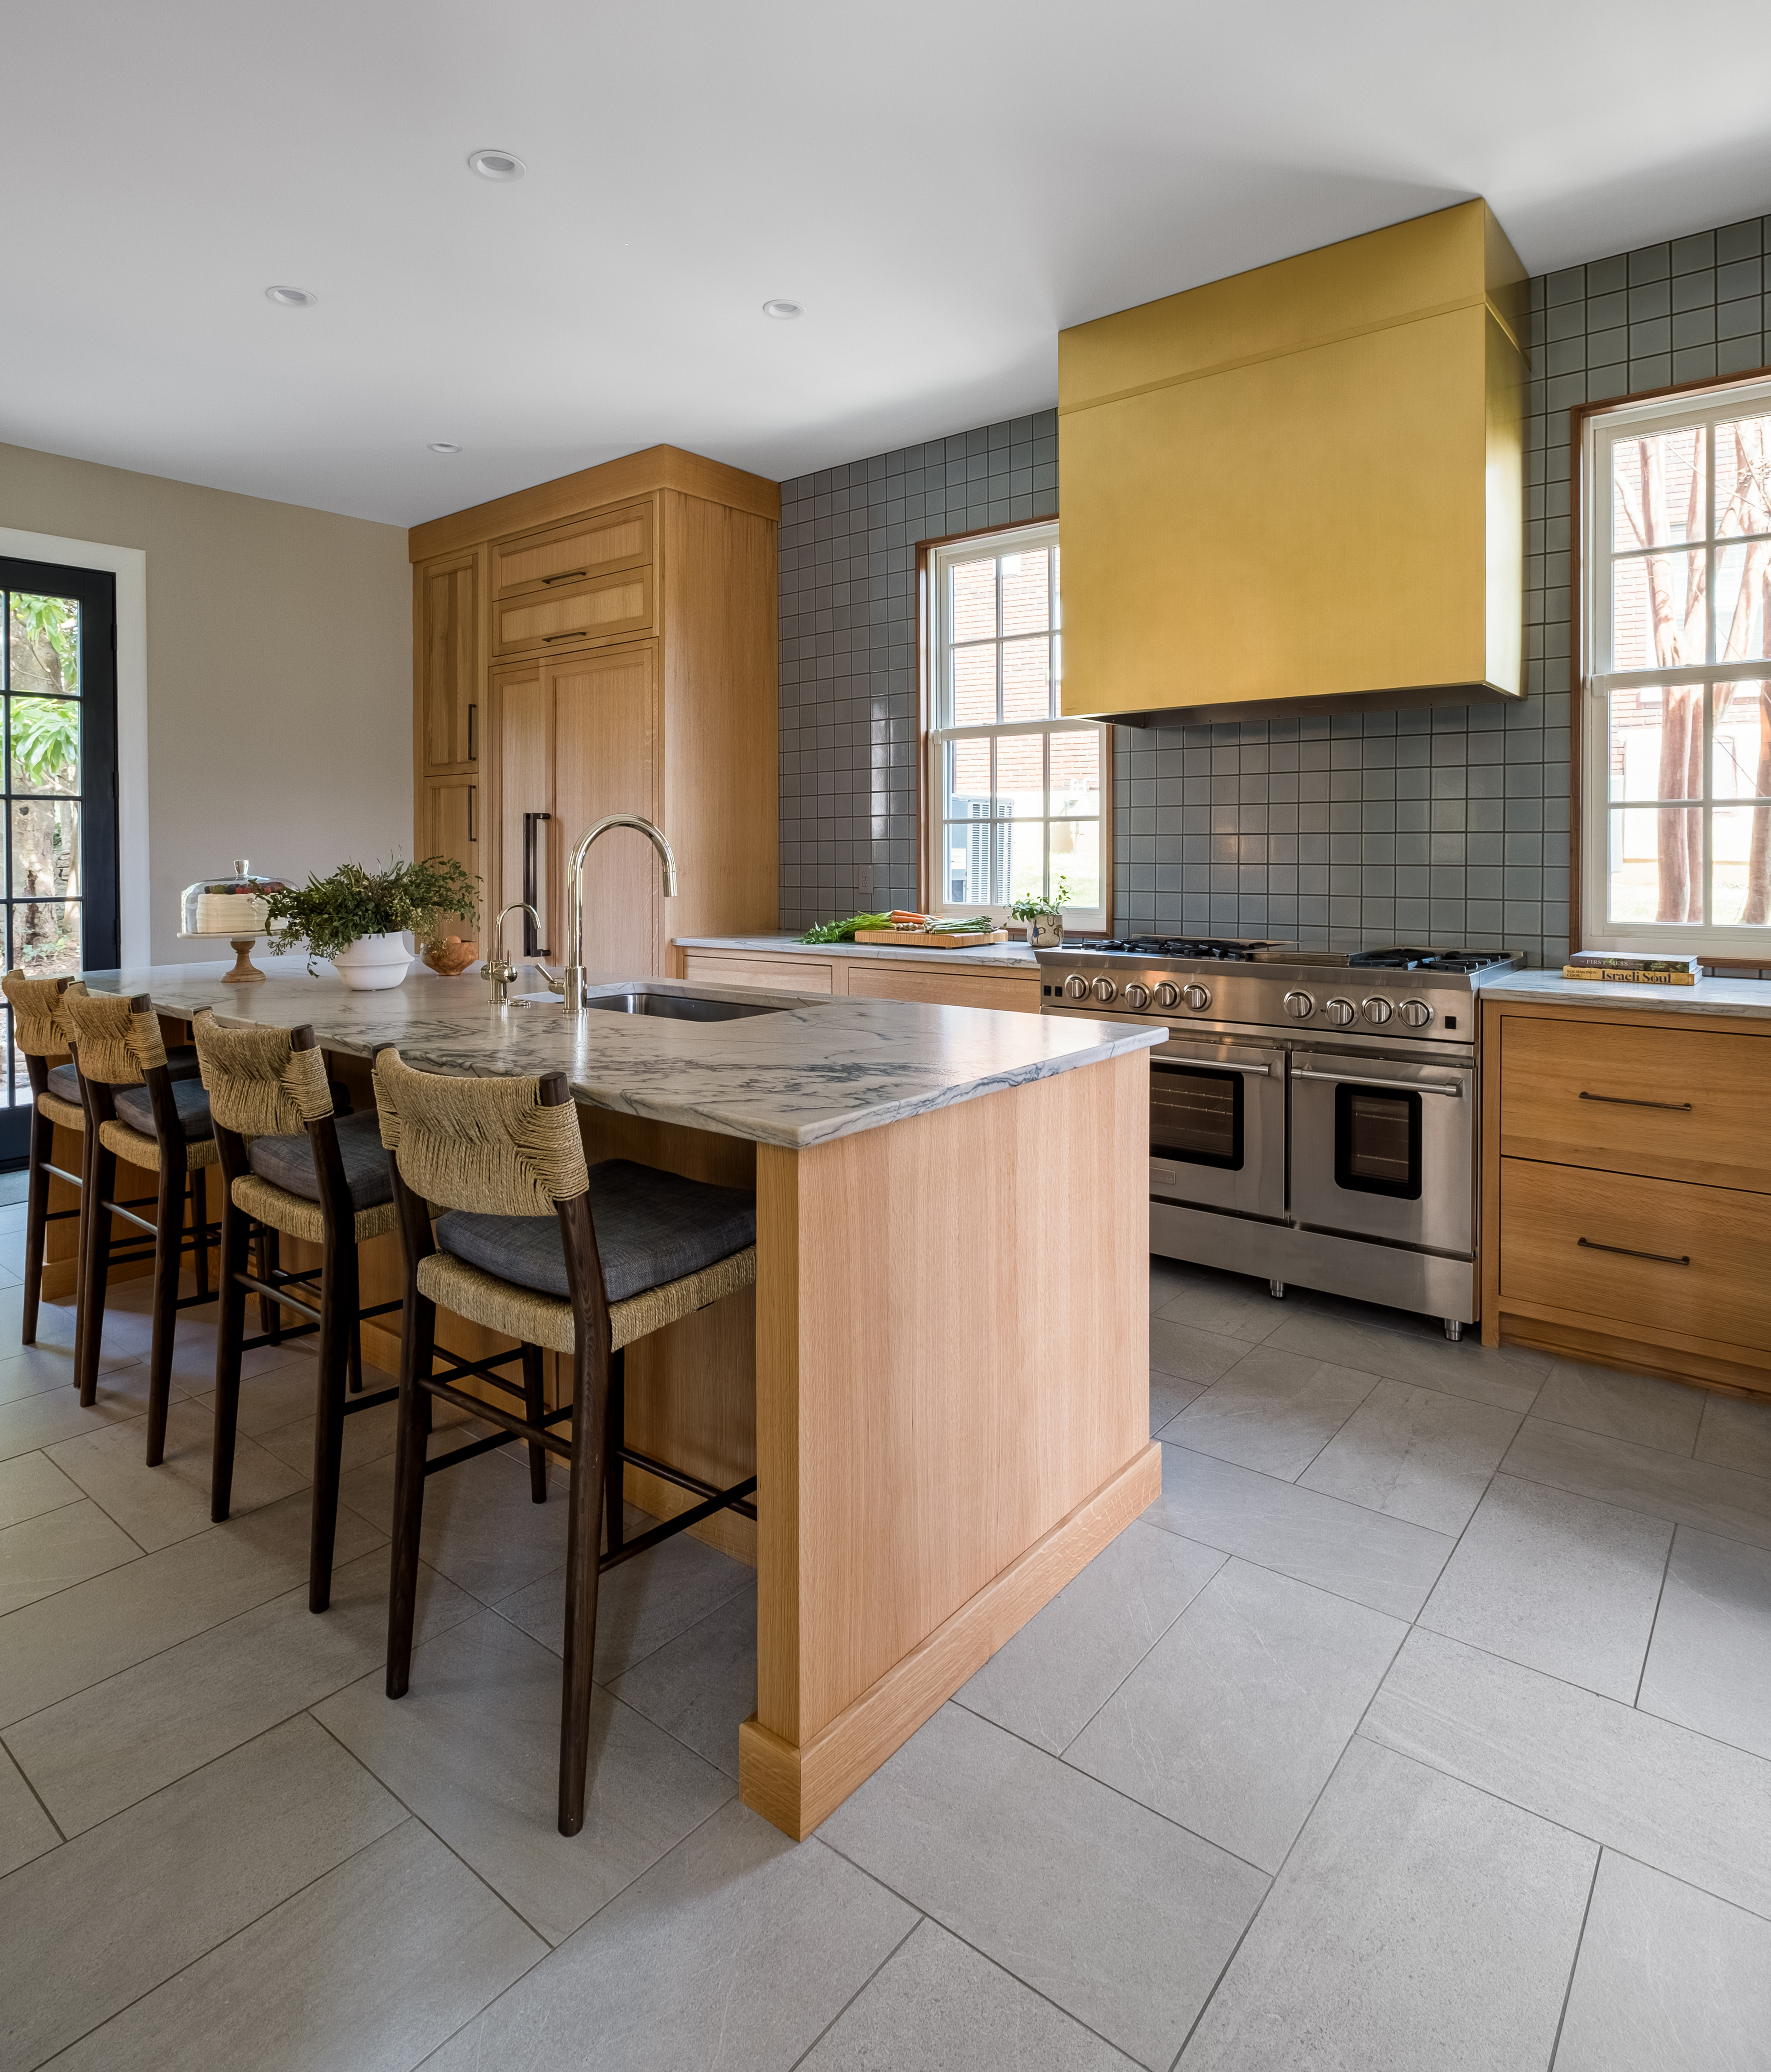 A modern french kitchen design with brown kitchen cabinets showcases exquisite marble kitchen countertops stunning marble backsplash